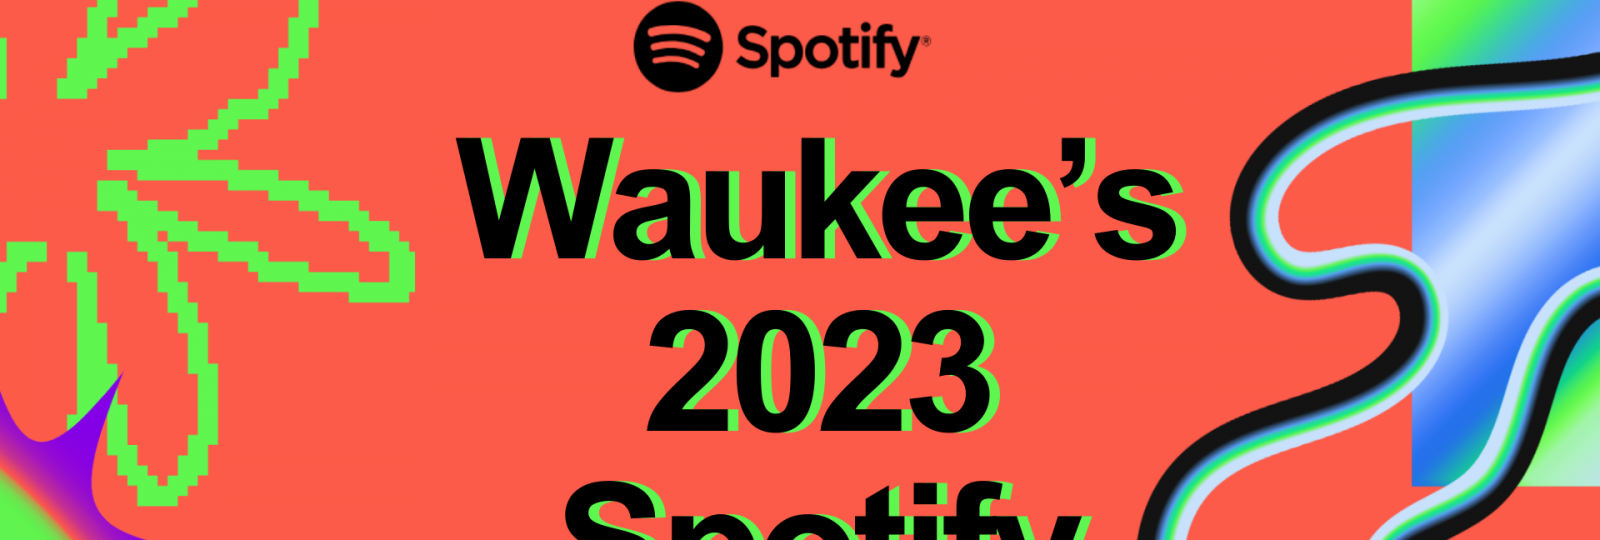 Waukee’s 2023 Spotify Wrapped (1)